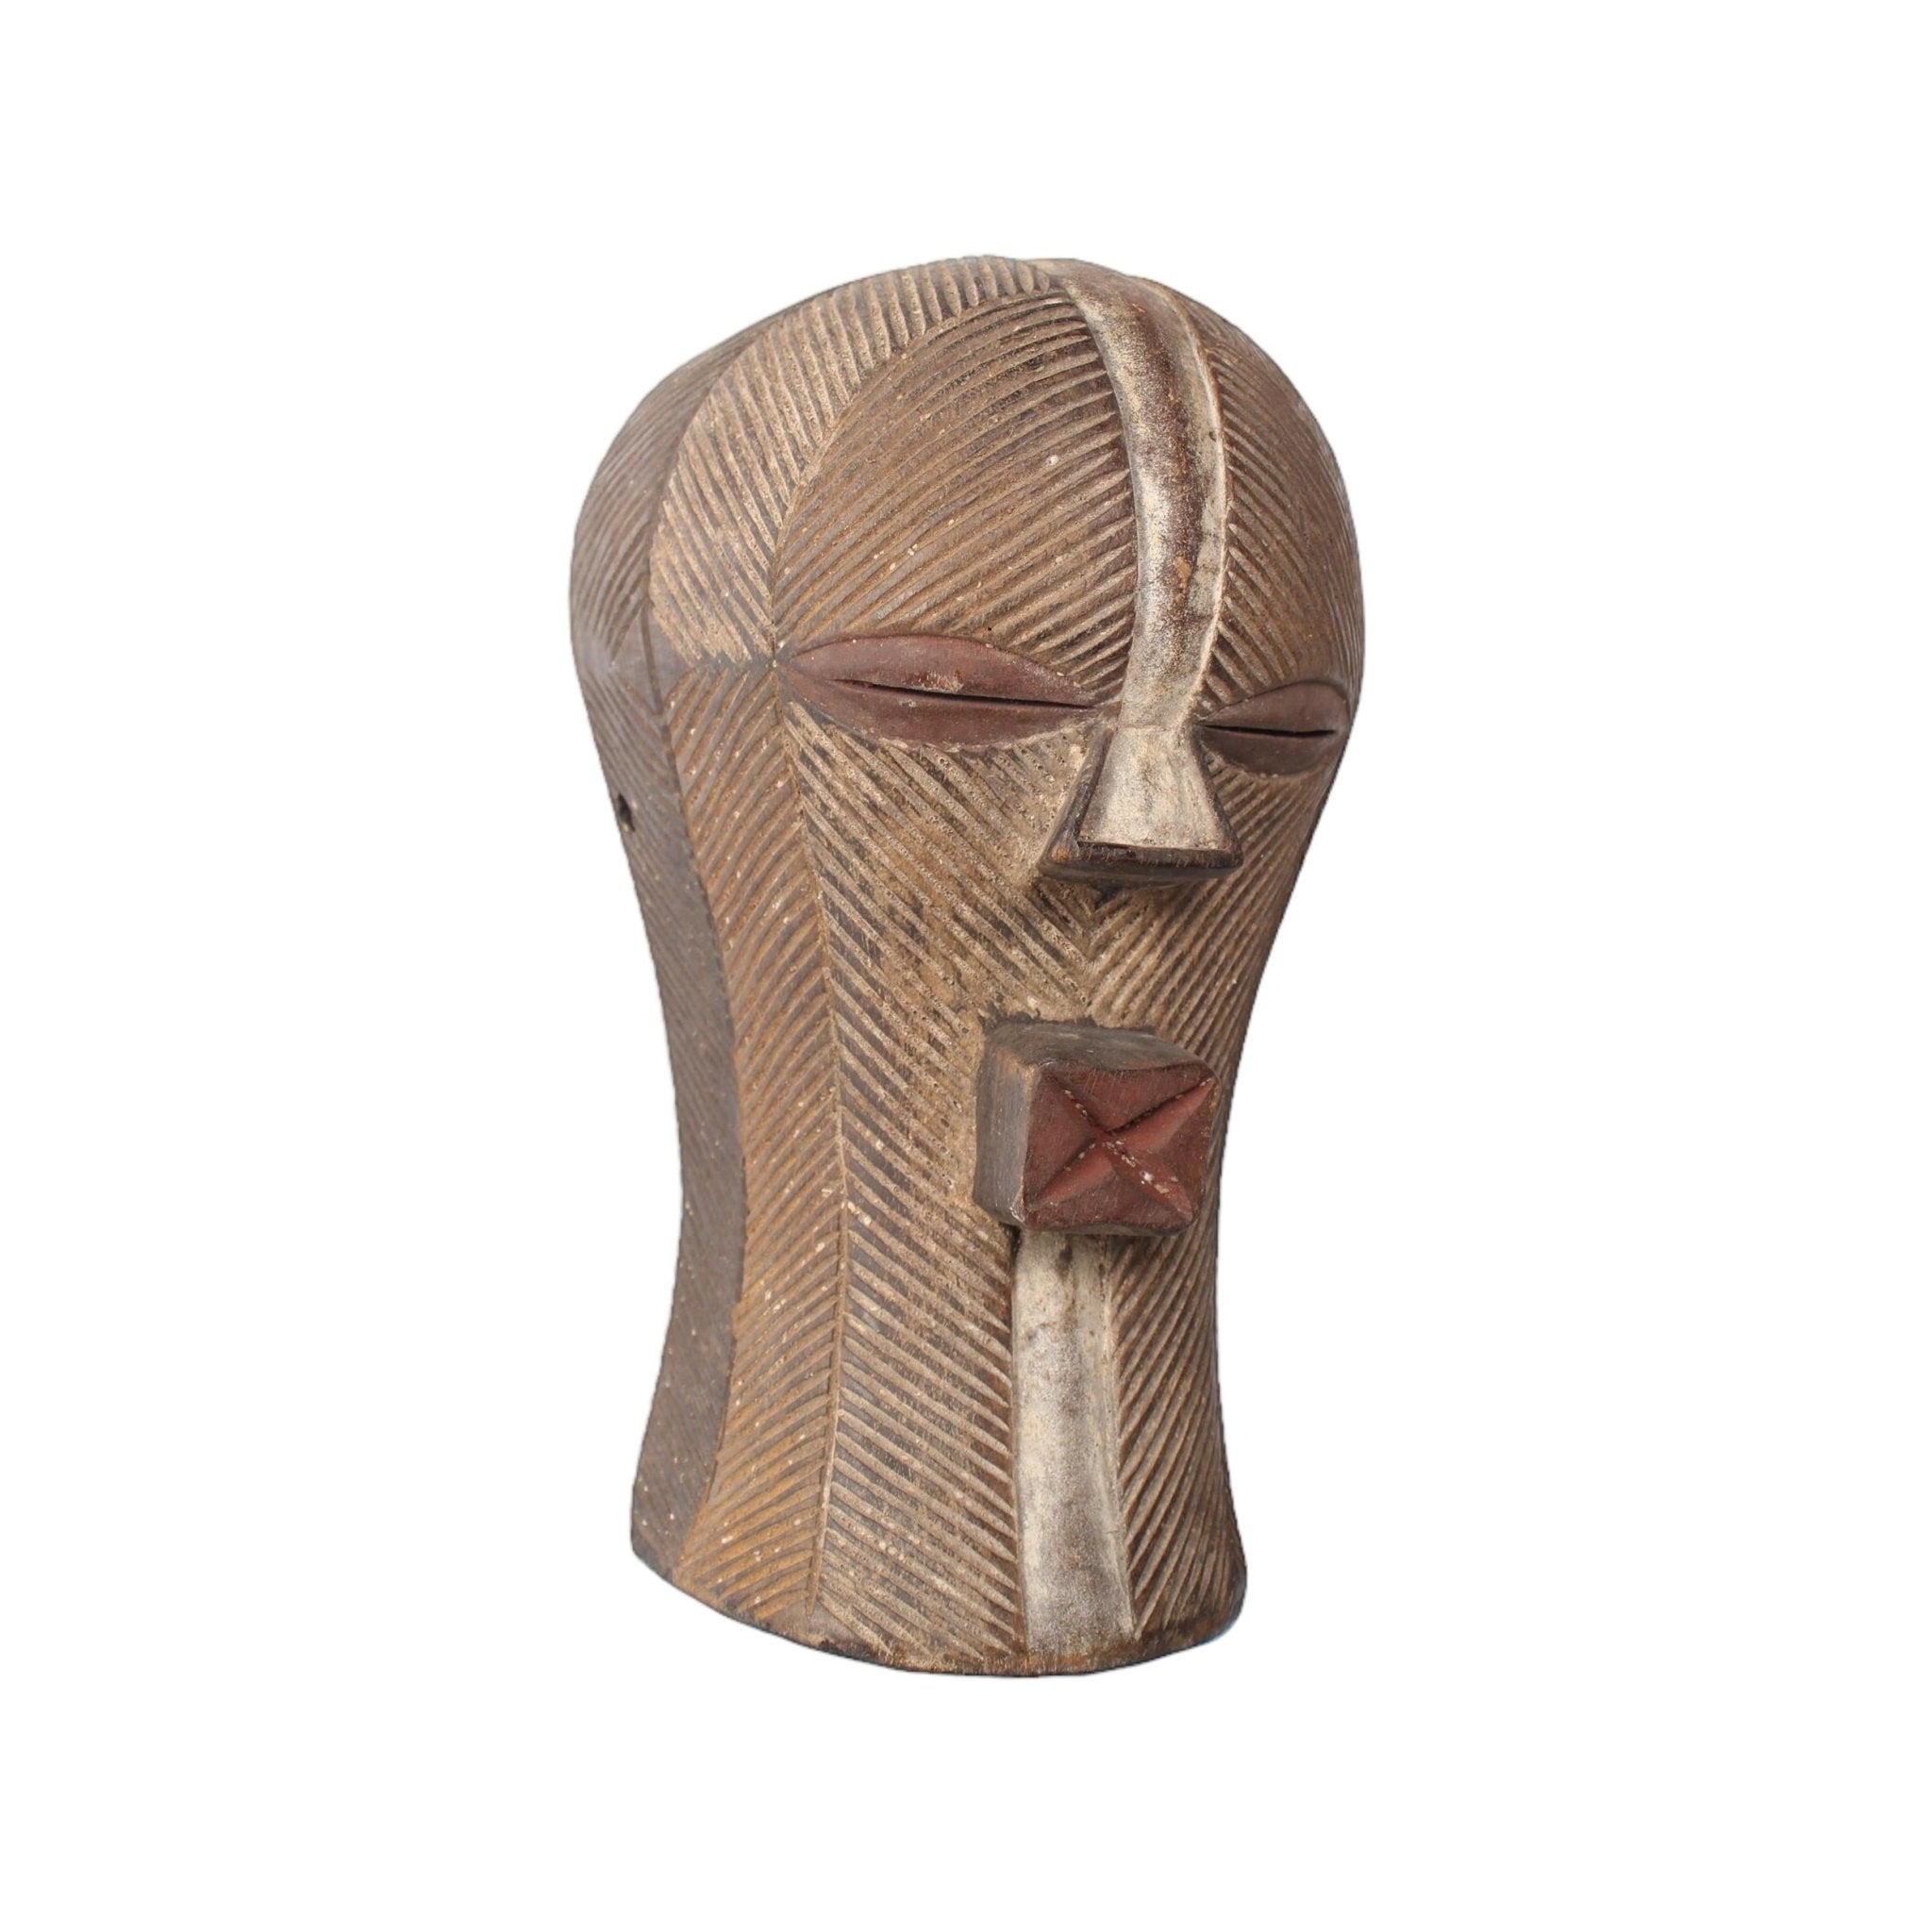 Basonge/Songye Tribe Mask ~12.2" Tall - African Angel Art - Mask